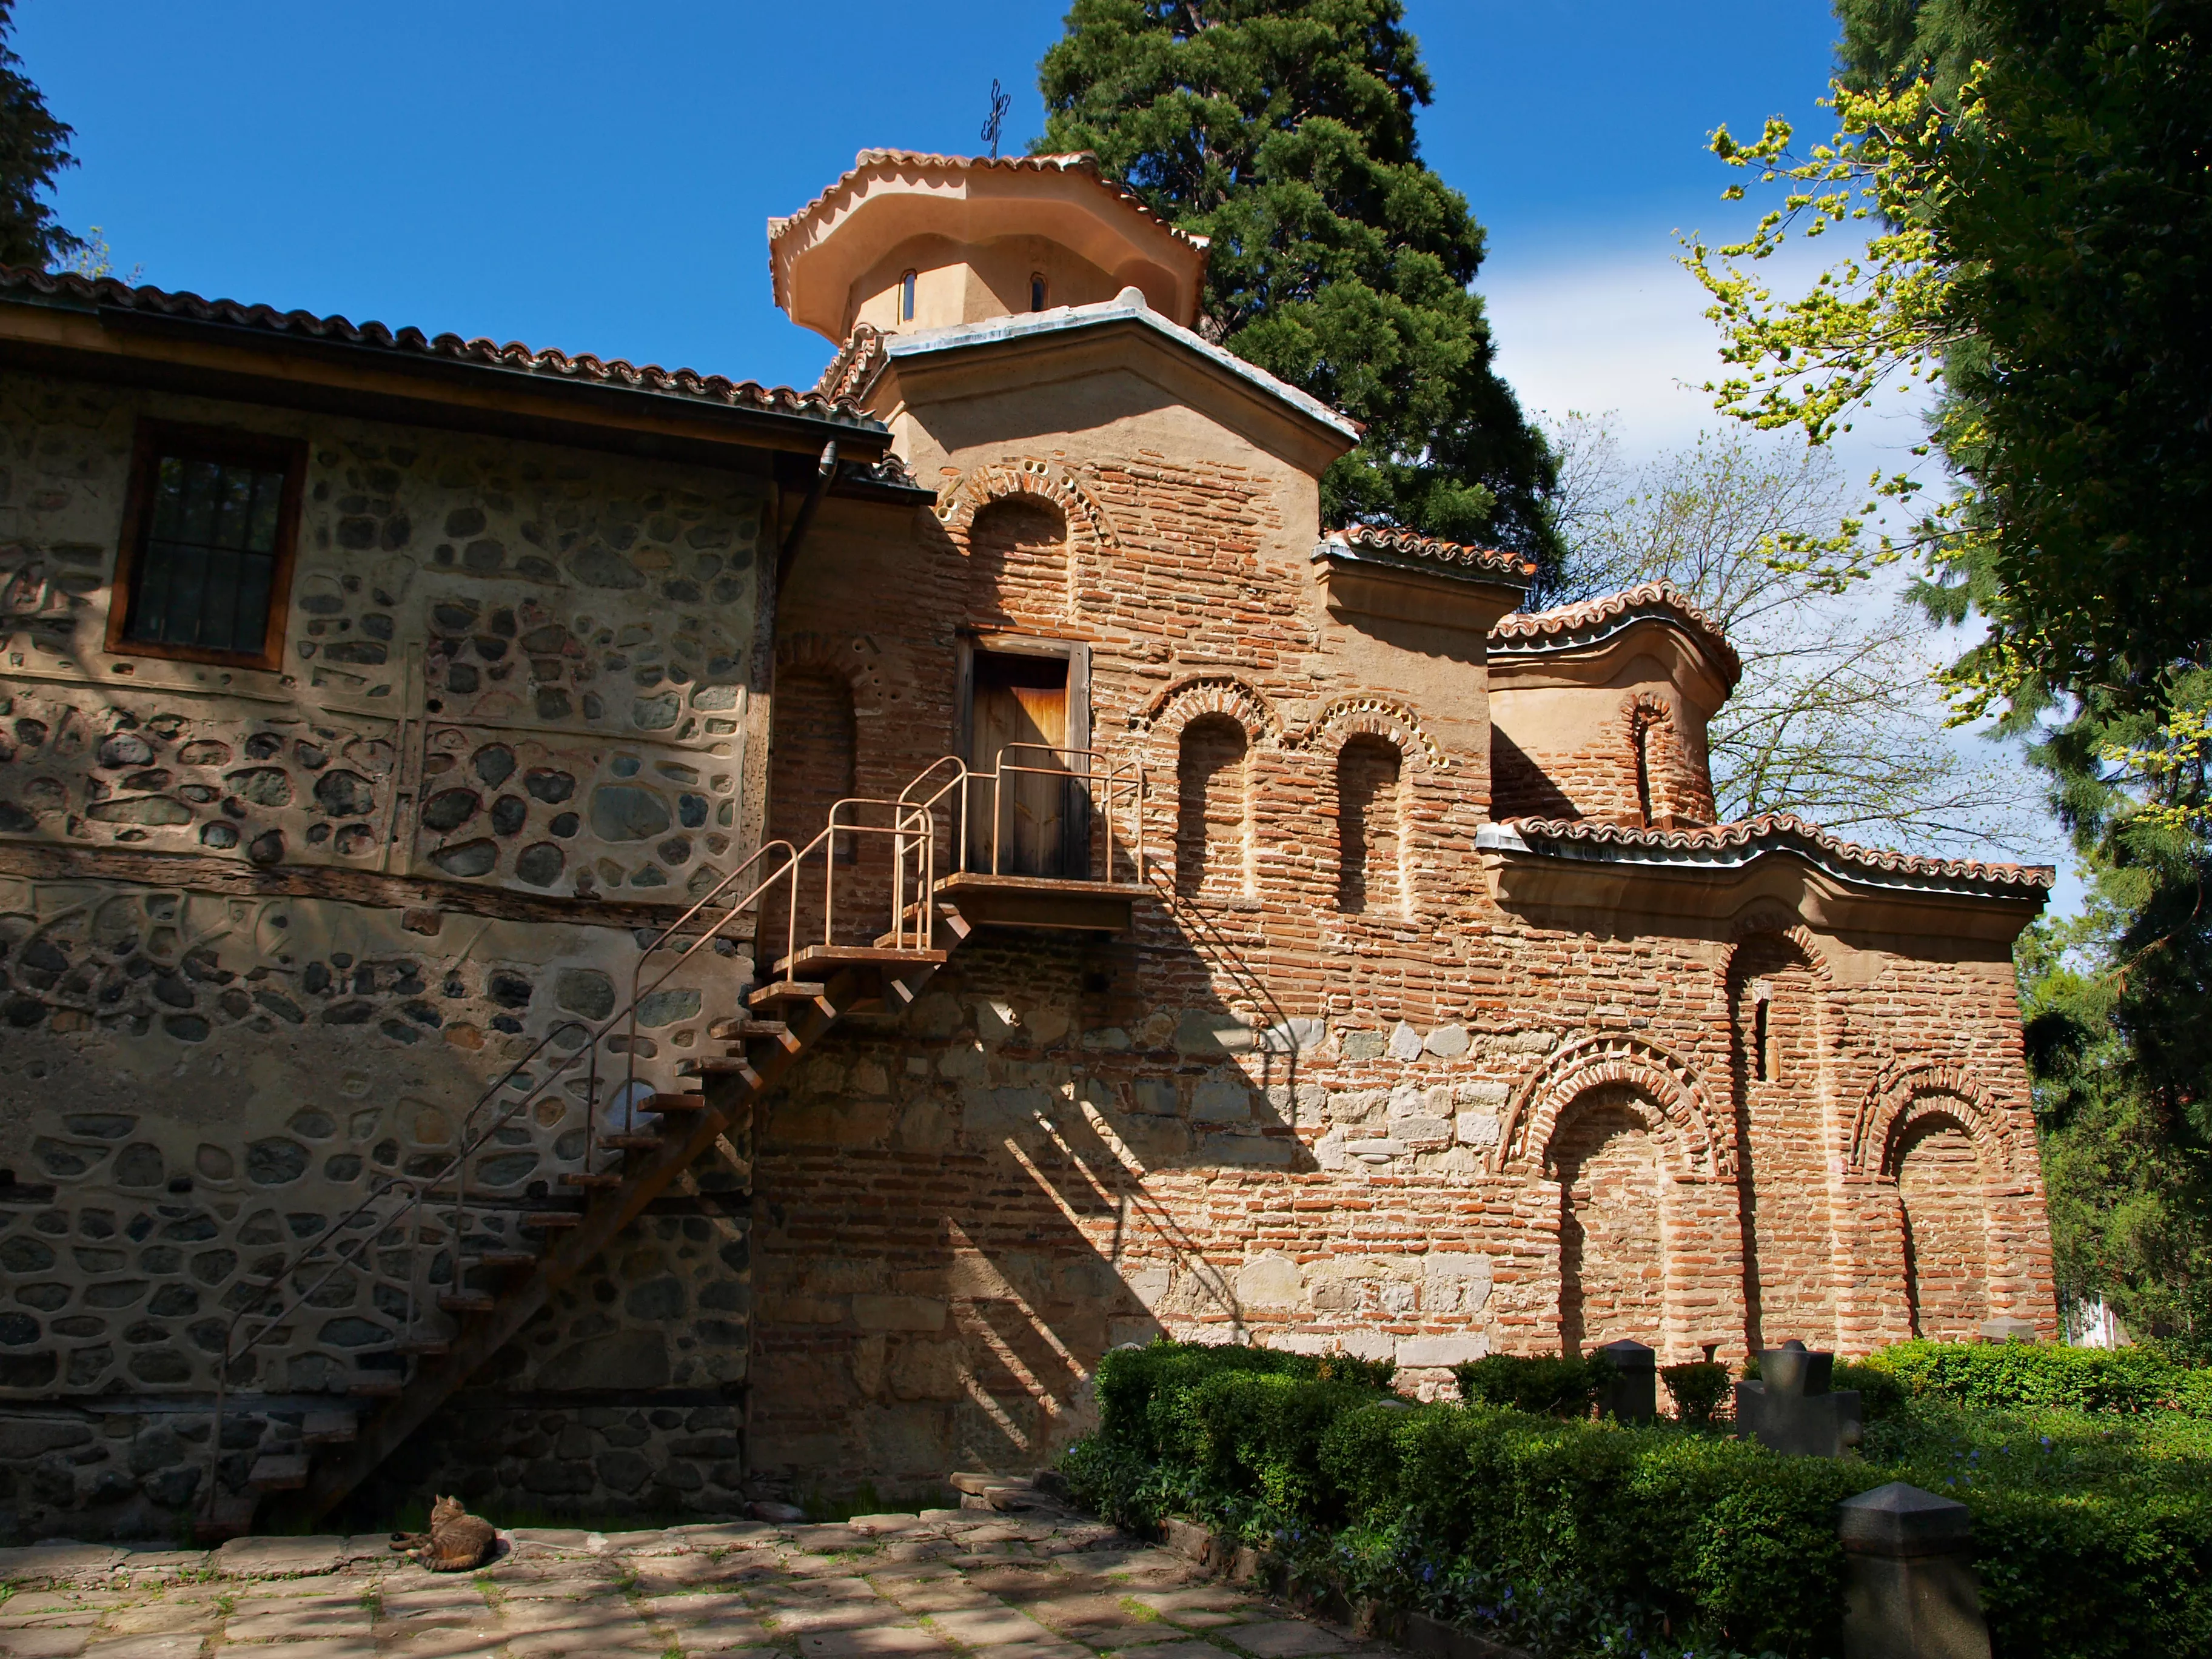 Boyana Church in Bulgaria, Europe | Architecture - Rated 3.7